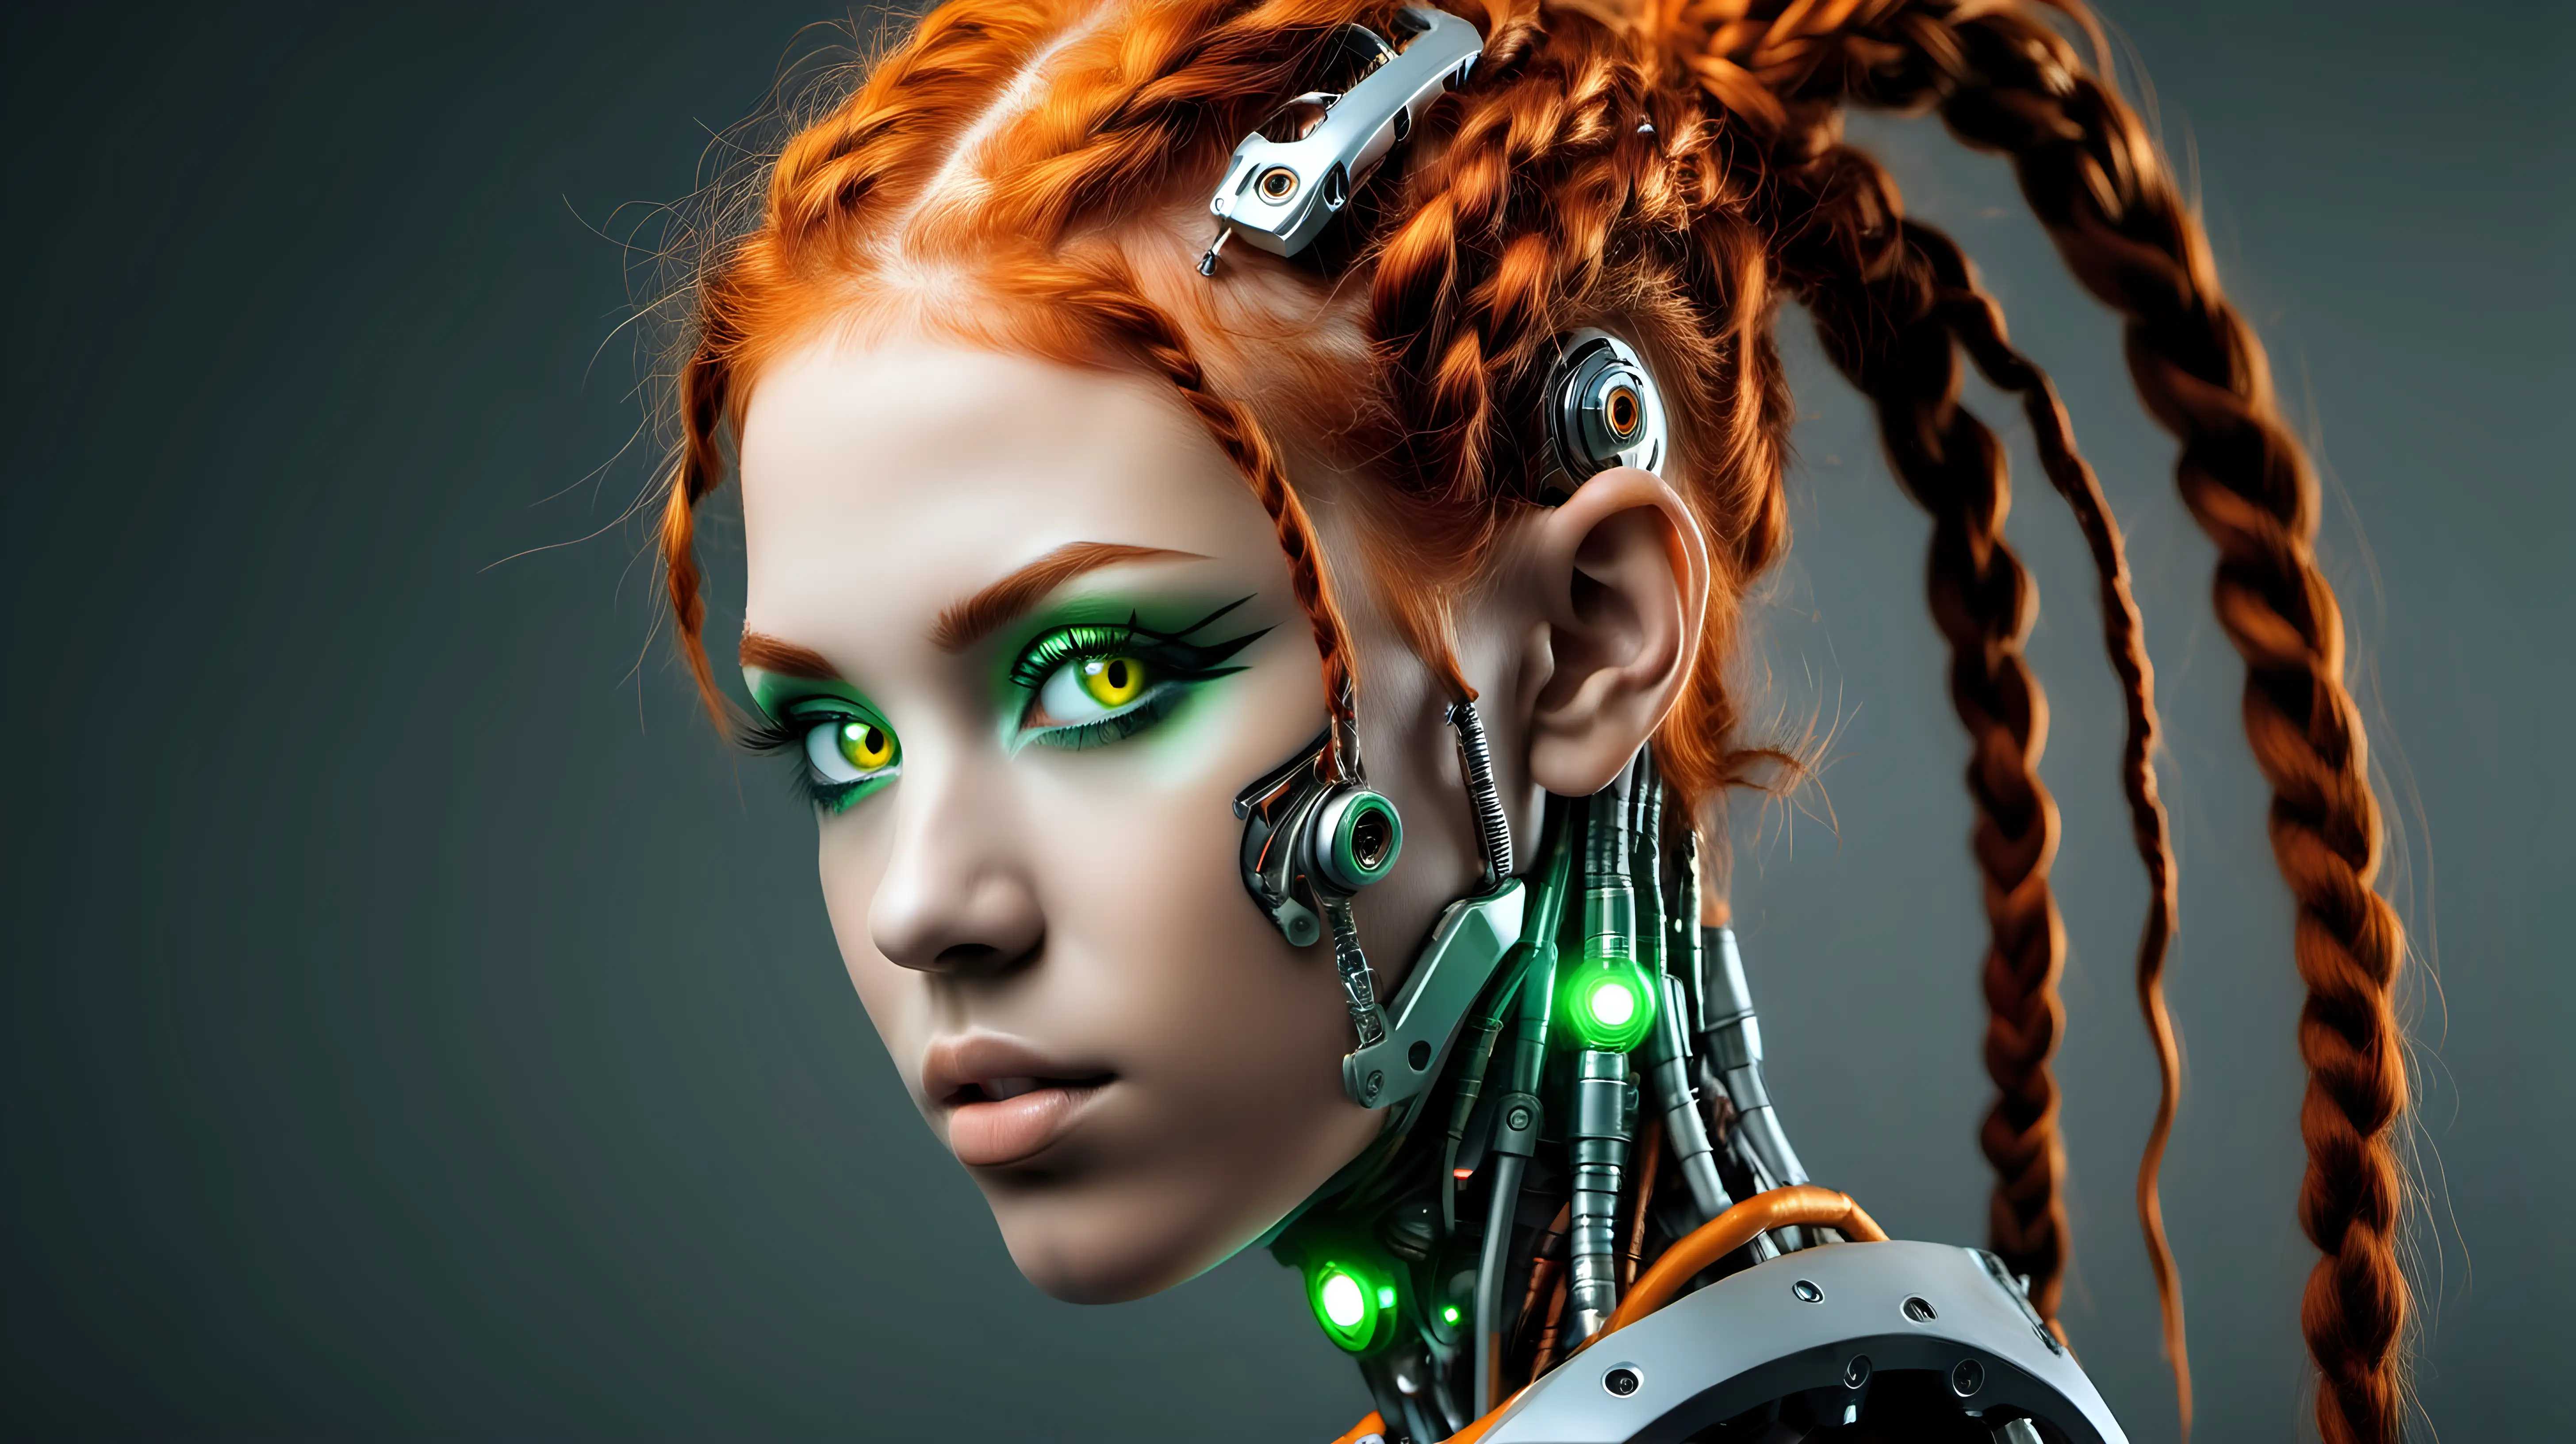 Stunning Cyborg Woman with Orange Wild Hair and Green Eyes